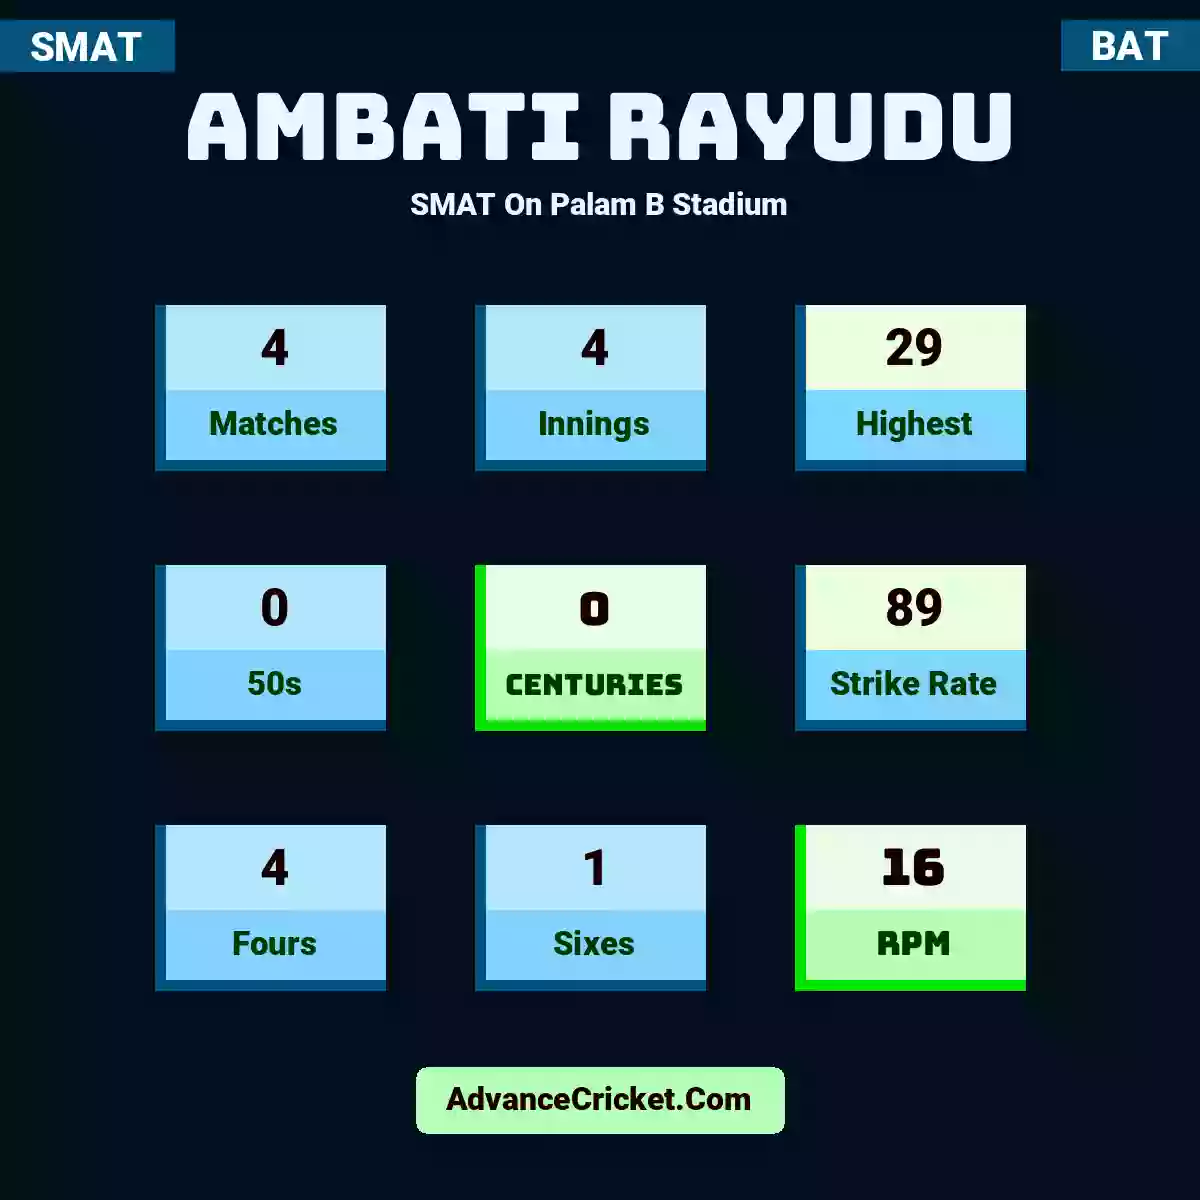 Ambati Rayudu SMAT  On Palam B Stadium, Ambati Rayudu played 4 matches, scored 29 runs as highest, 0 half-centuries, and 0 centuries, with a strike rate of 89. A.Rayudu hit 4 fours and 1 sixes, with an RPM of 16.